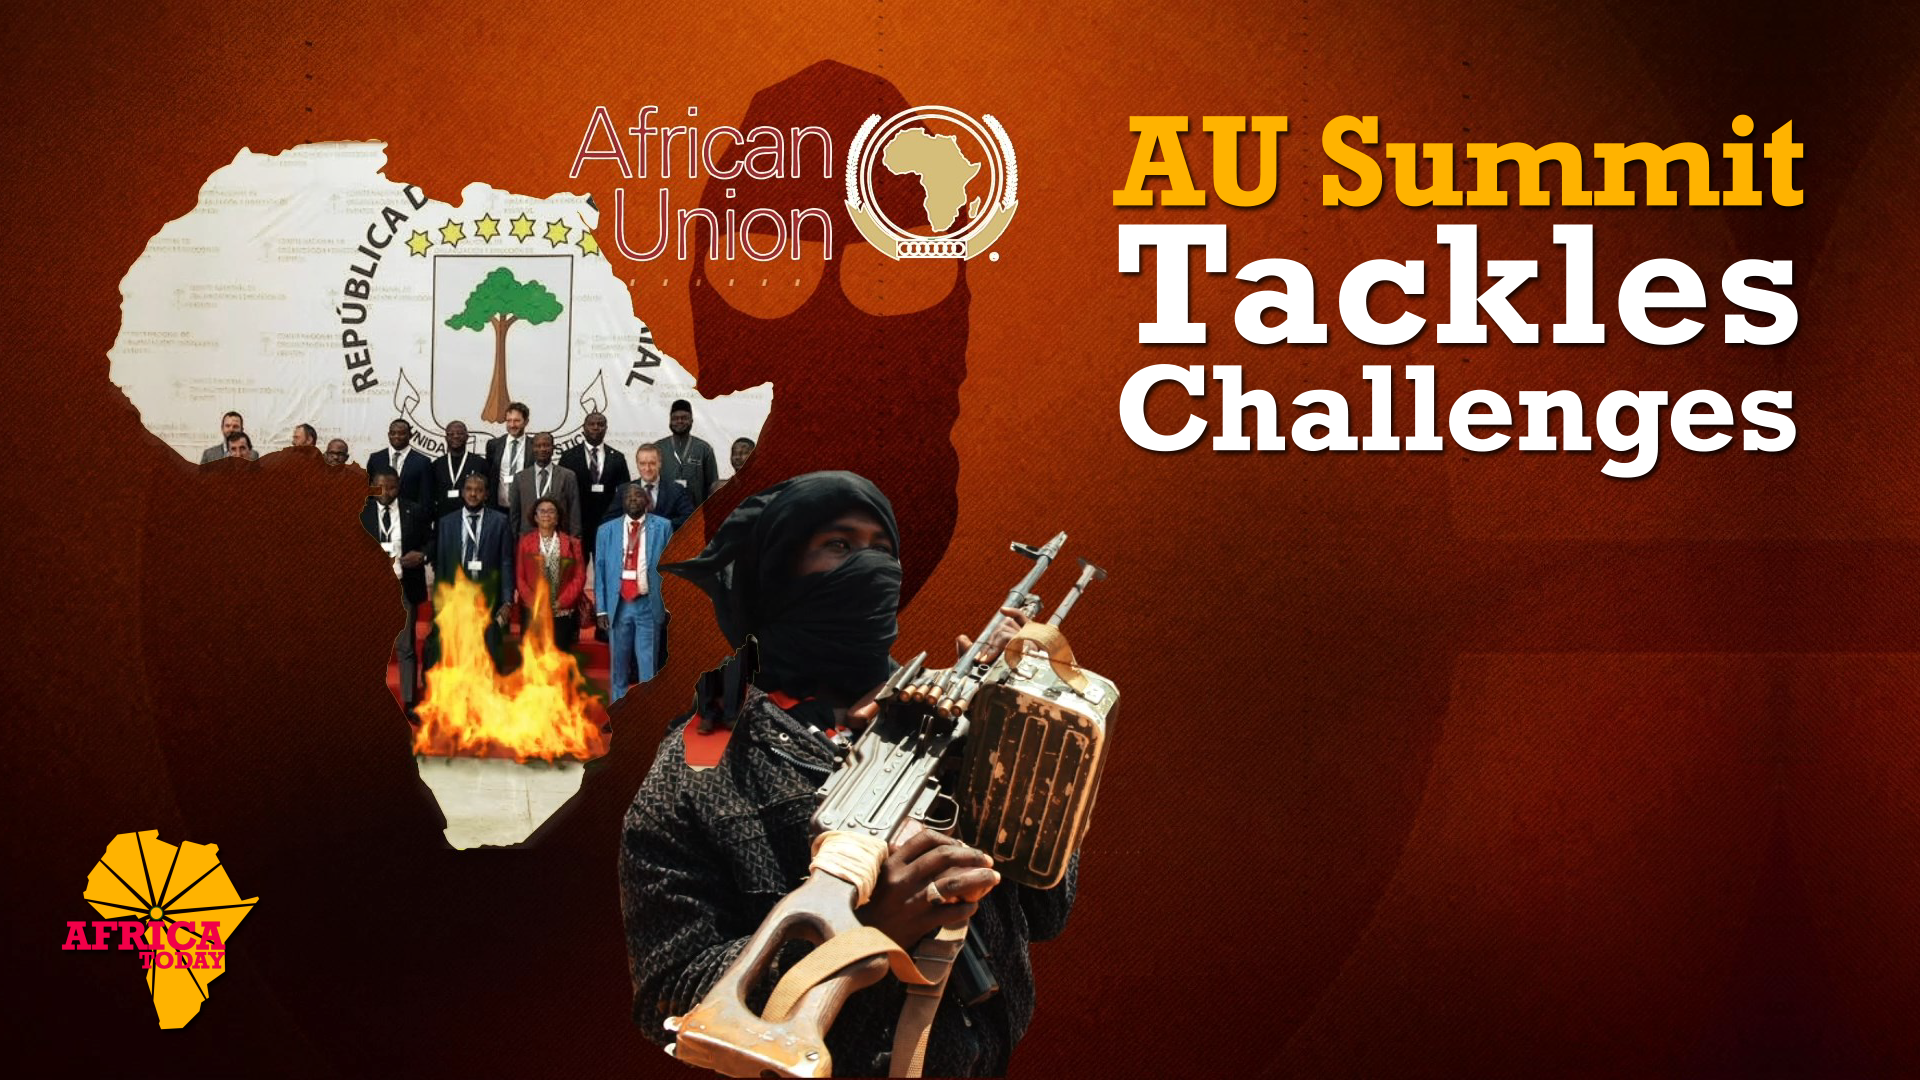 AU Summit tackles challenges